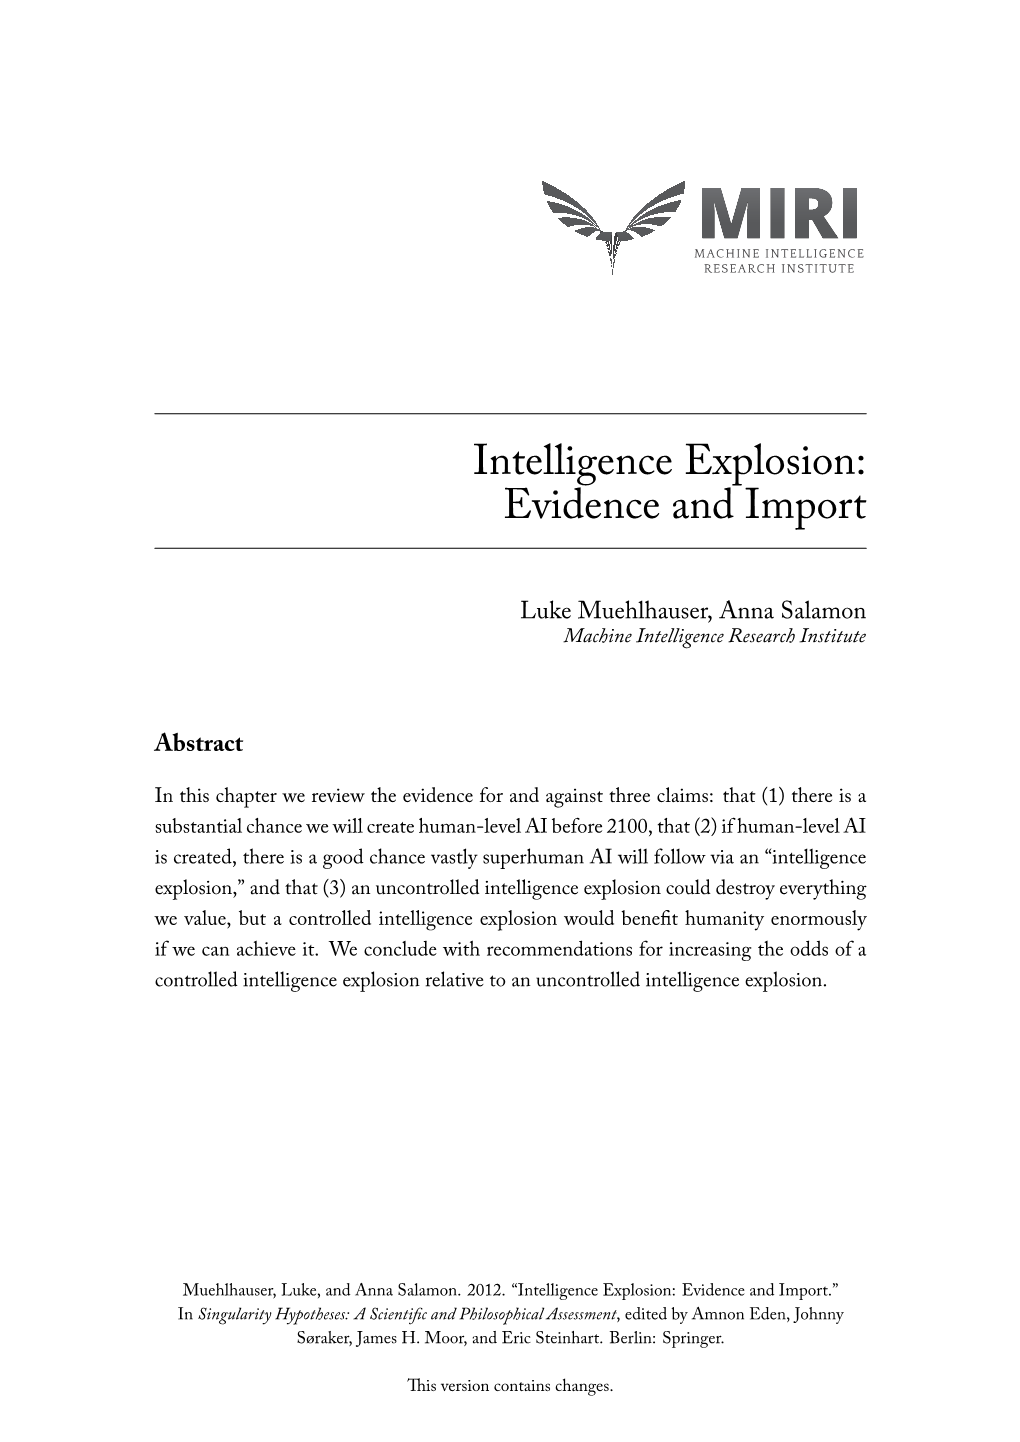 Intelligence Explosion: Evidence and Import